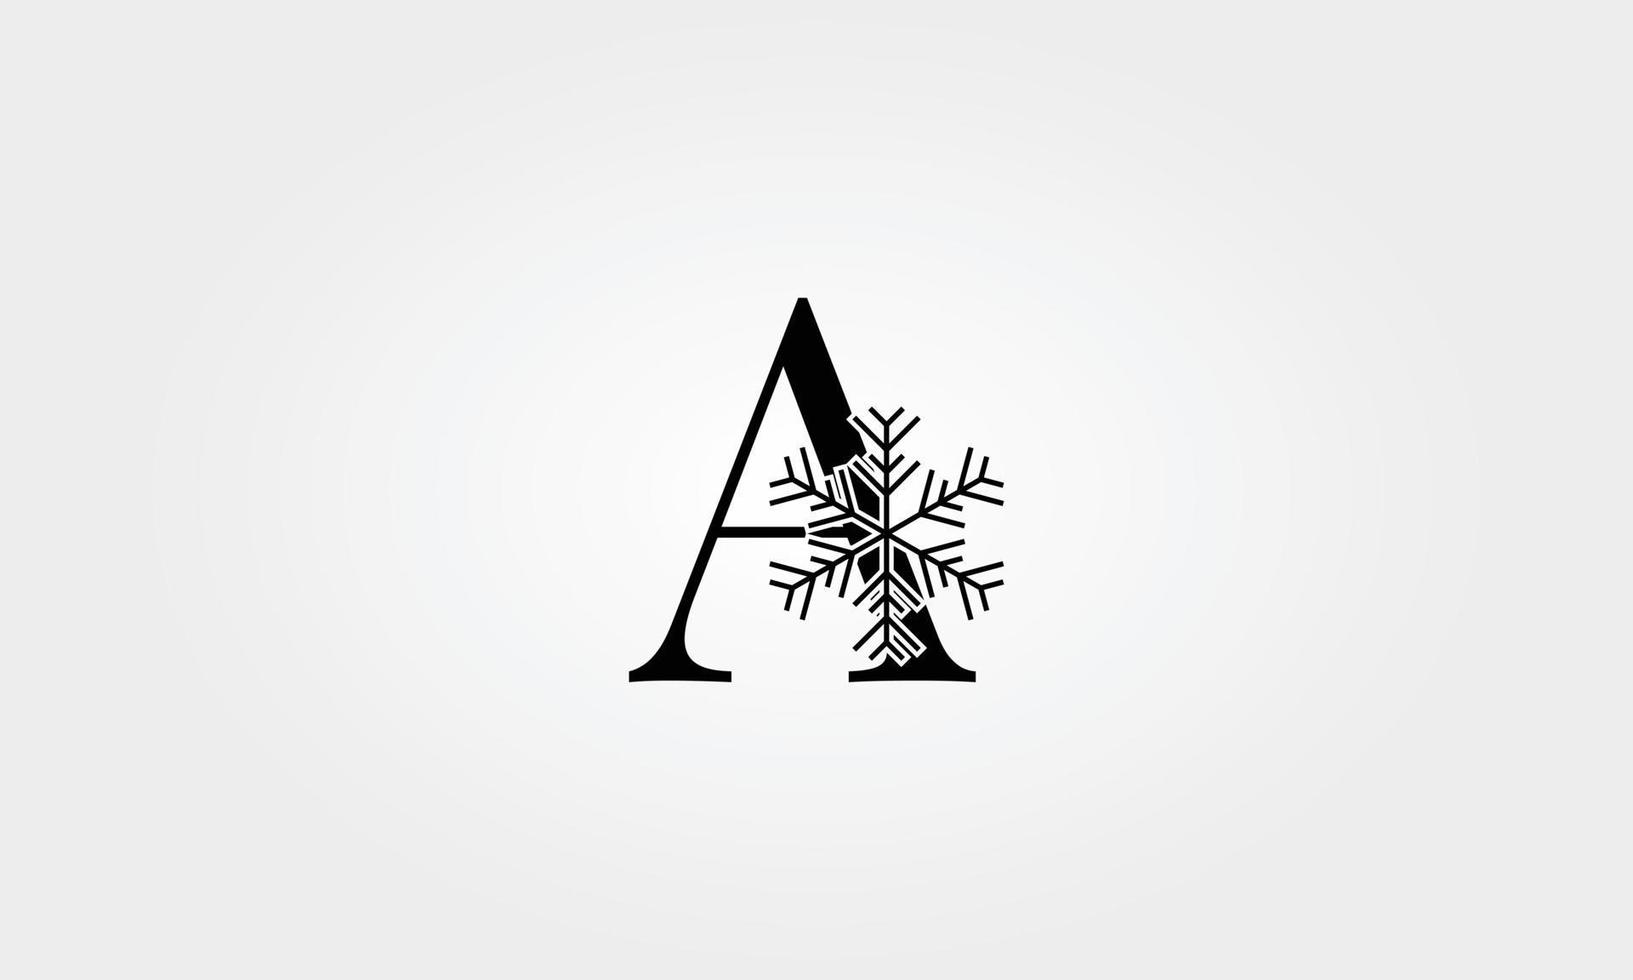 alfabeto copo de nieve letra a vector